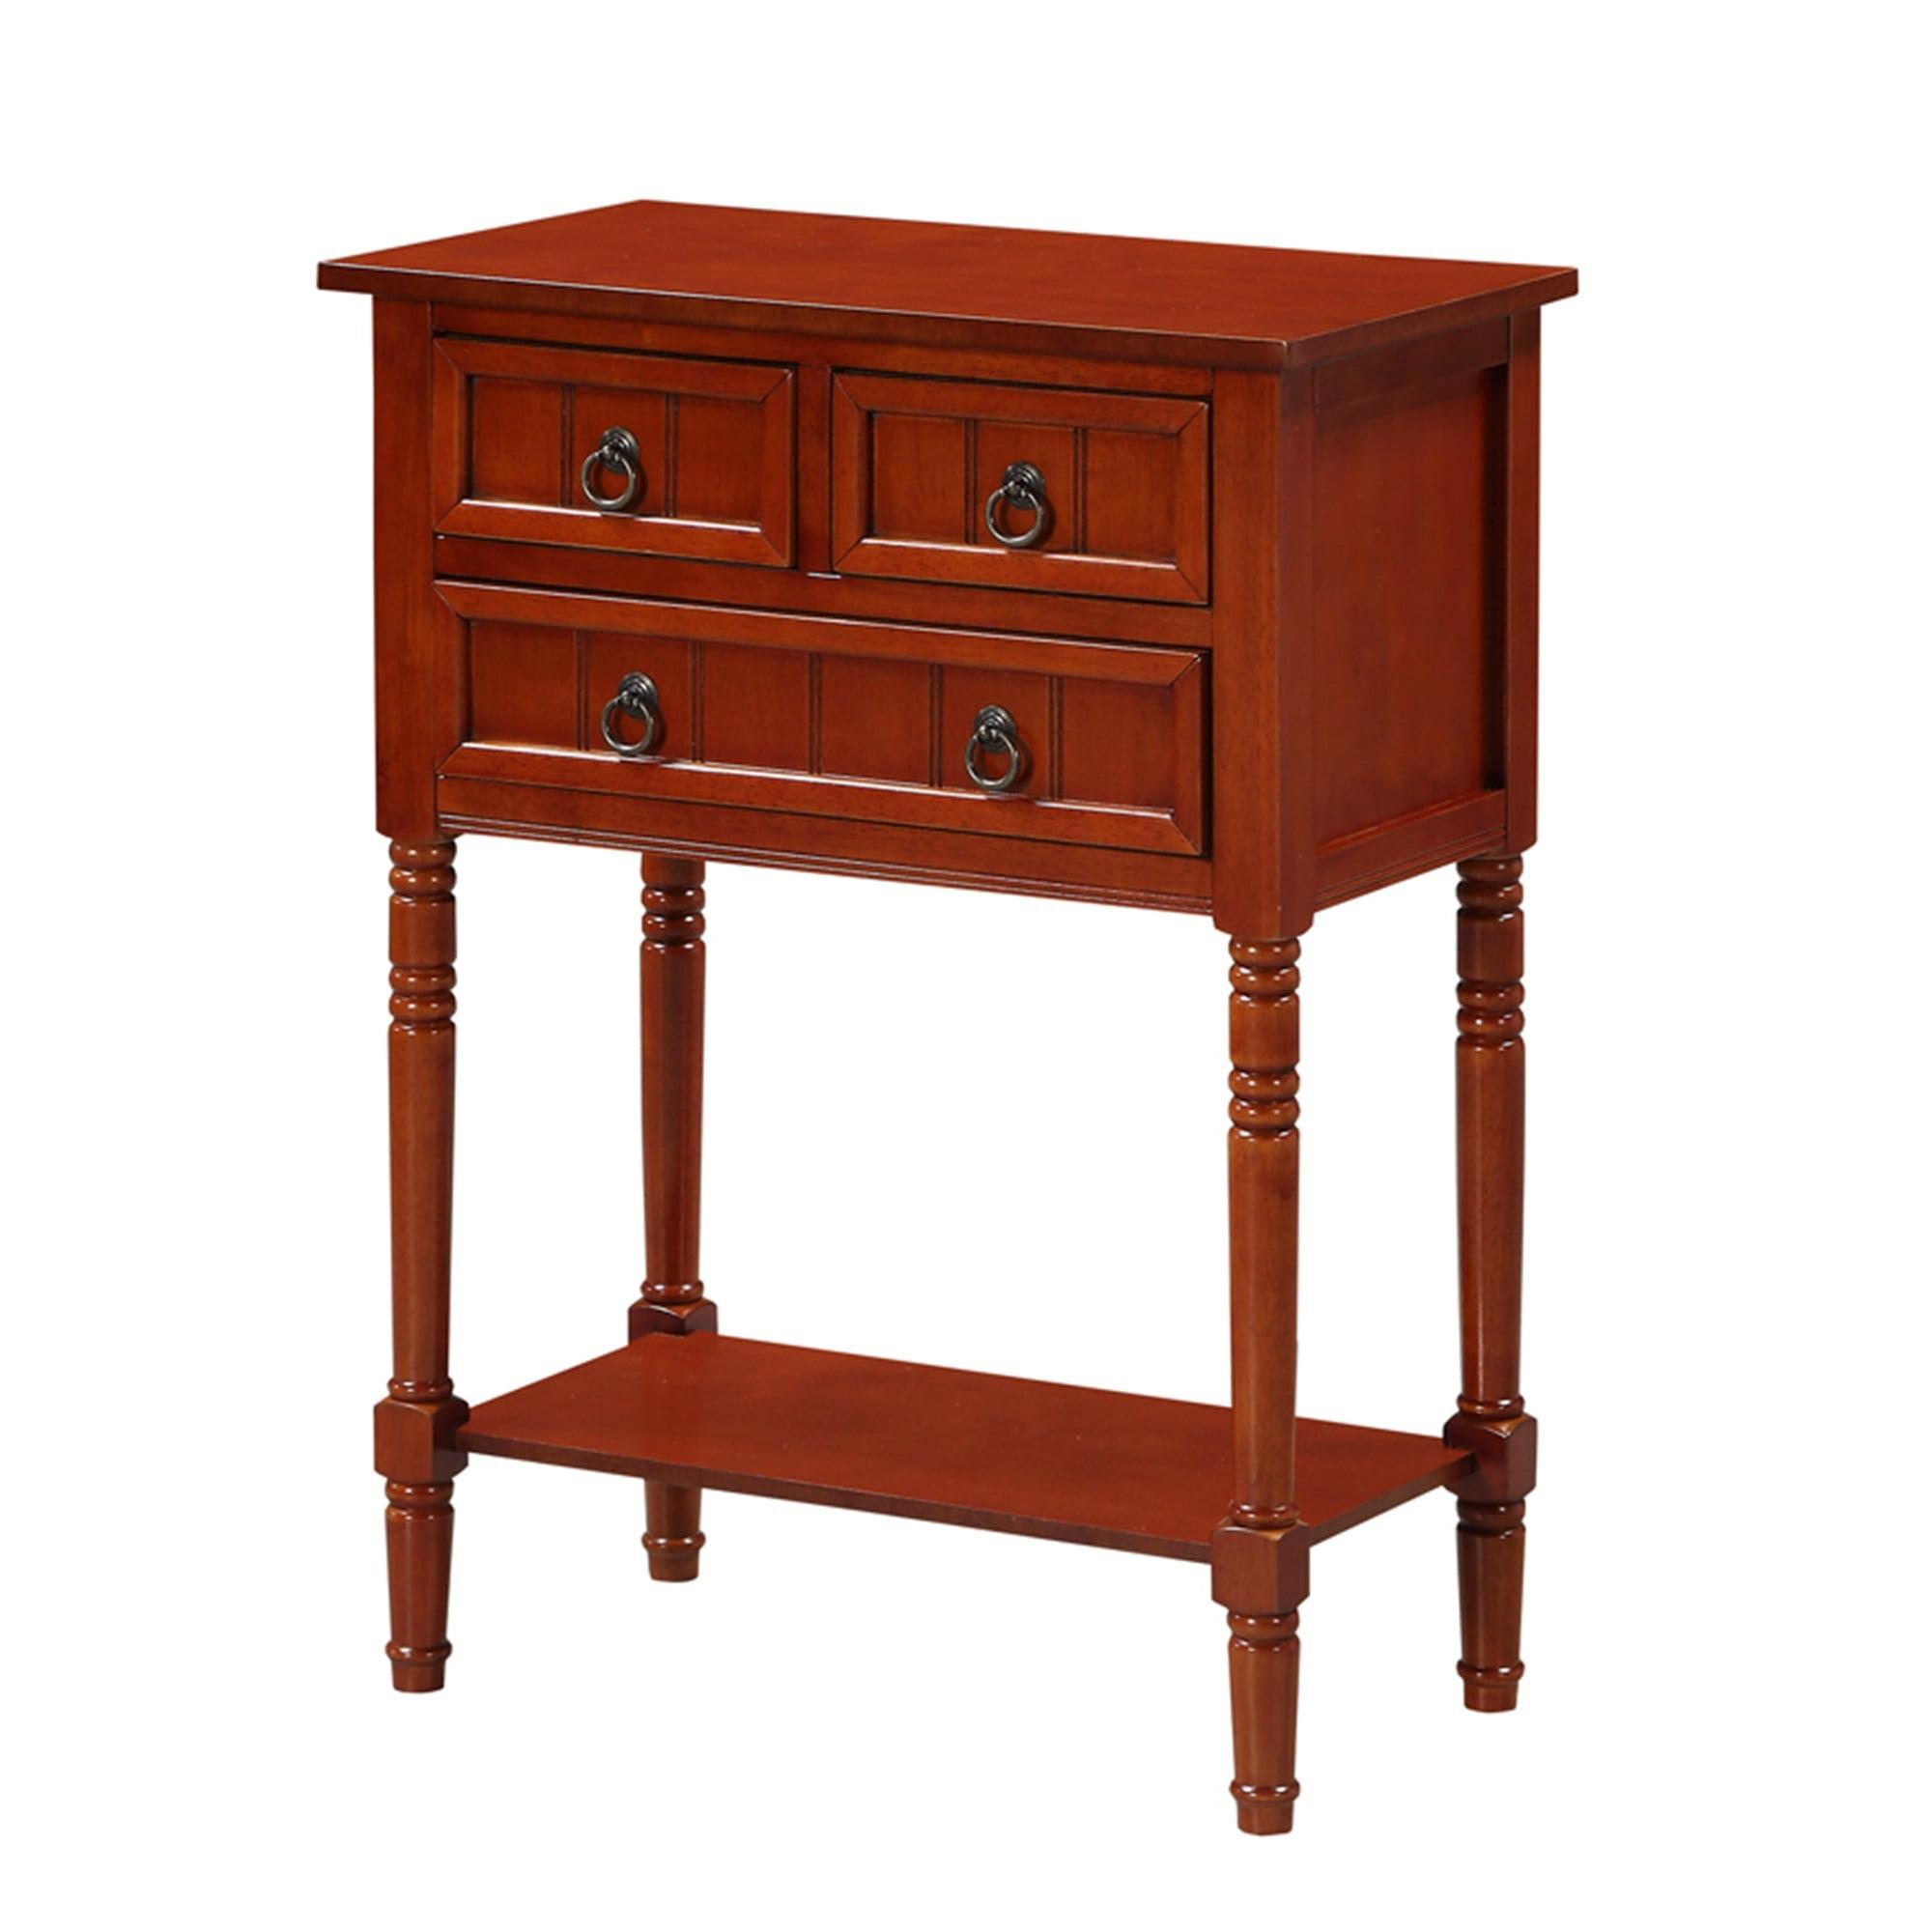 Elegant Cherry Wood Rectangular Hall Table with Storage Shelf and 3 Drawers